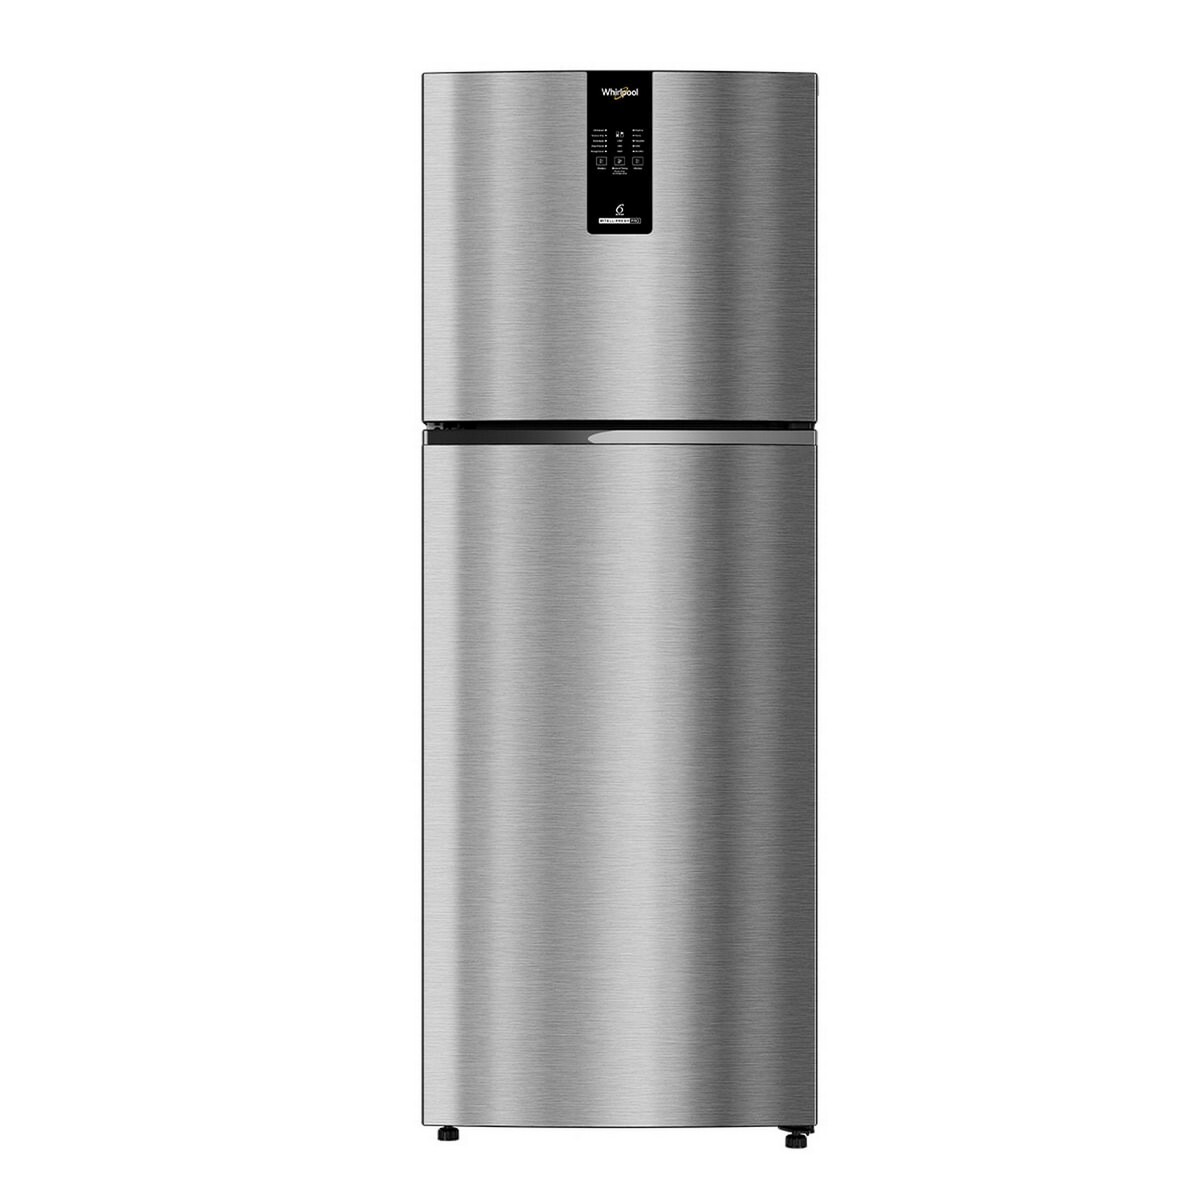 Whirlpool Intellifresh Pro 308L Convertible Frost Free Double-Door Refrigerator Cnv375 Illusia Steel